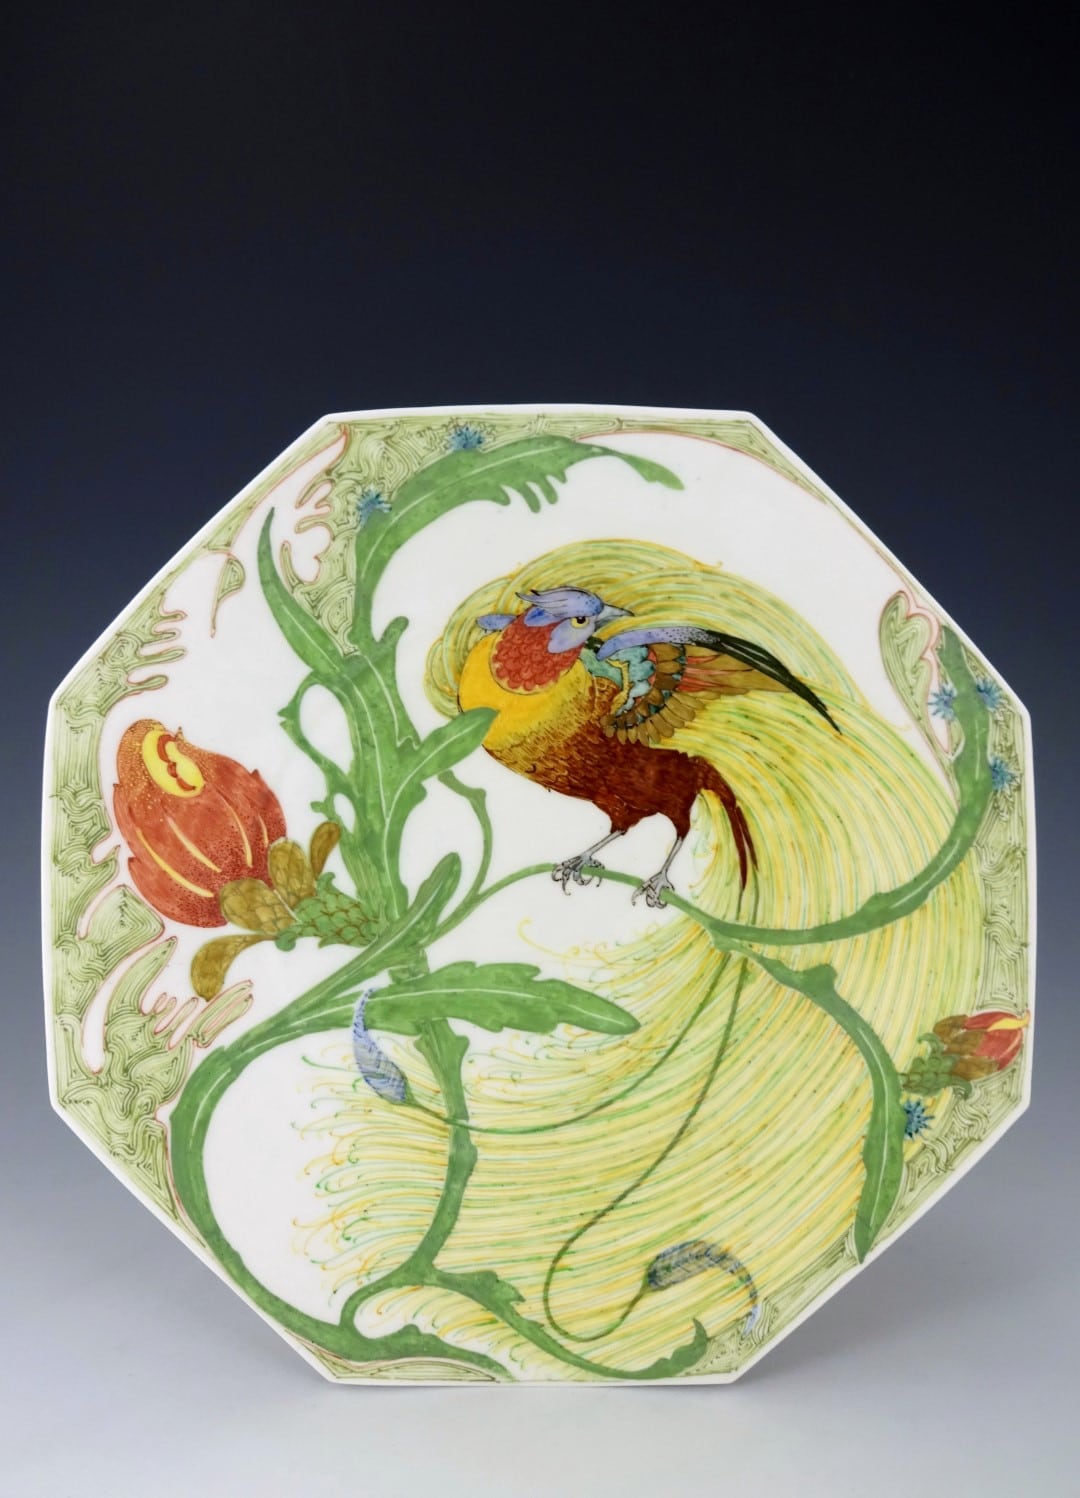 -rozenburg porcelain-plate with a pheasant by CWJ 't Hart 1914-image1